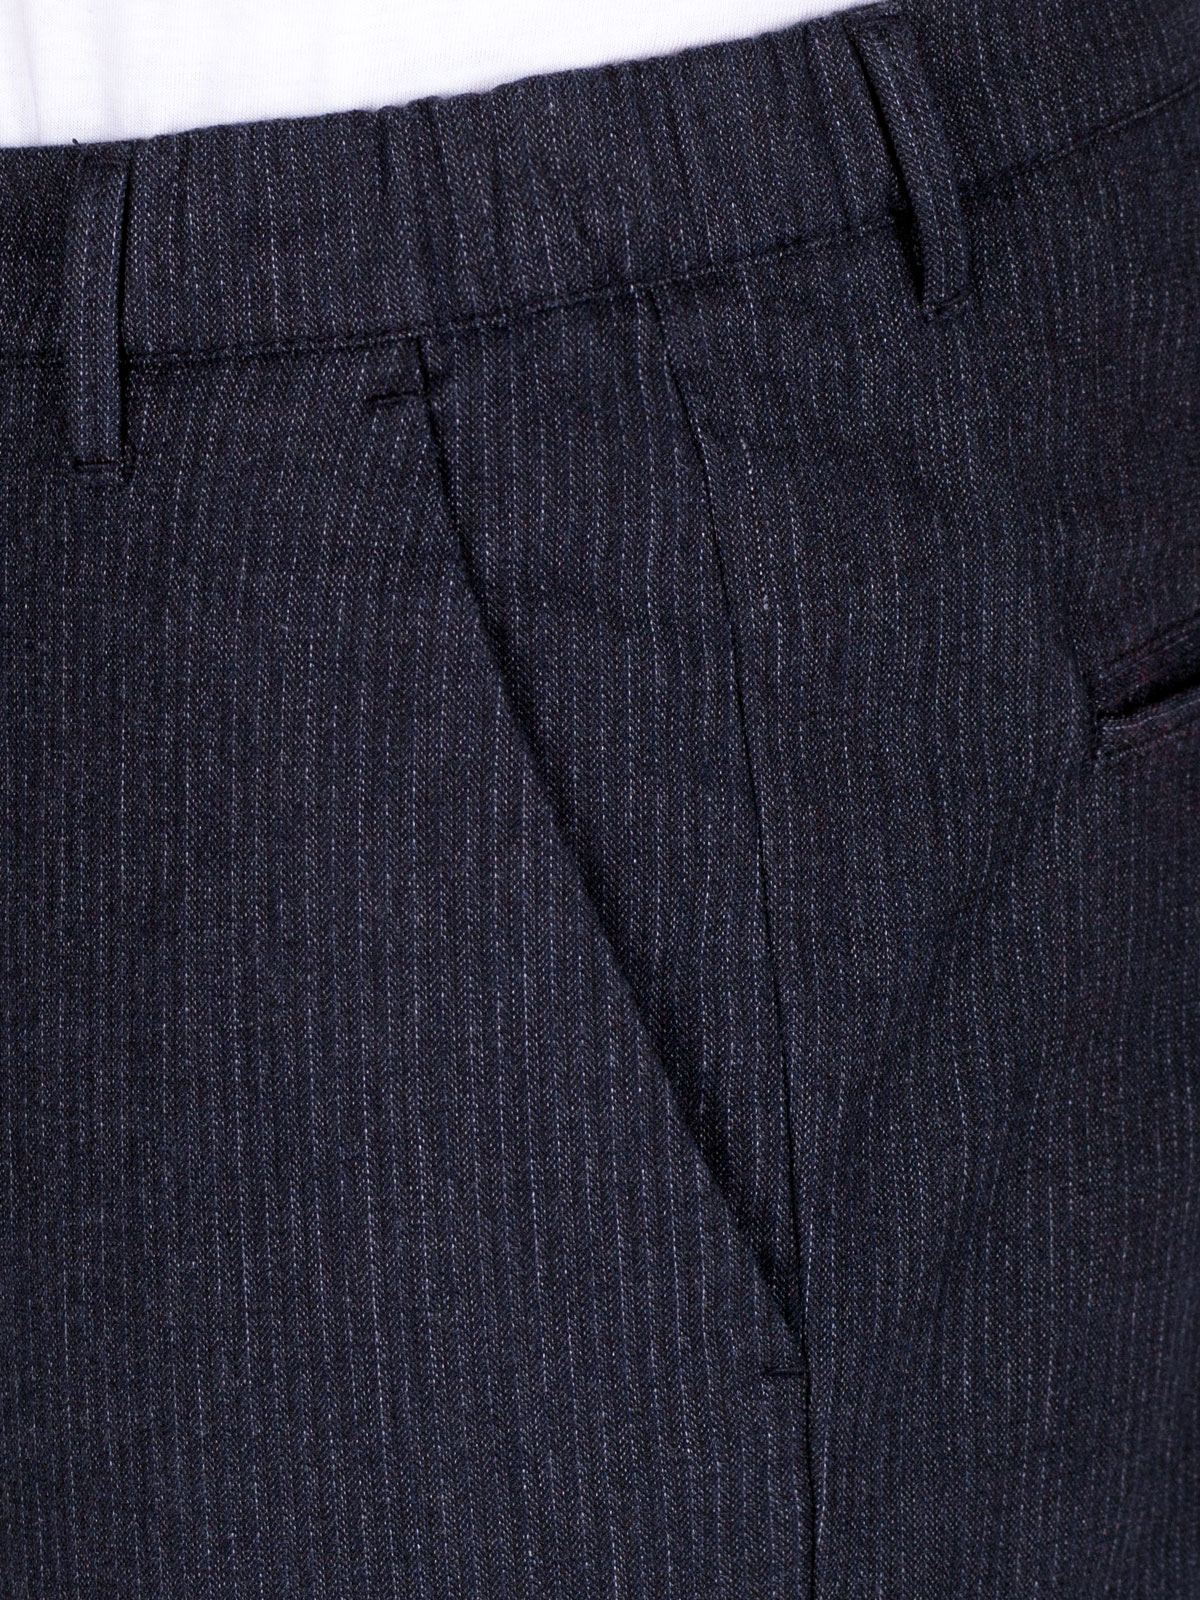 Pantaloni cu dungi albastre cu sireturi - 60283 € 66.93 img2